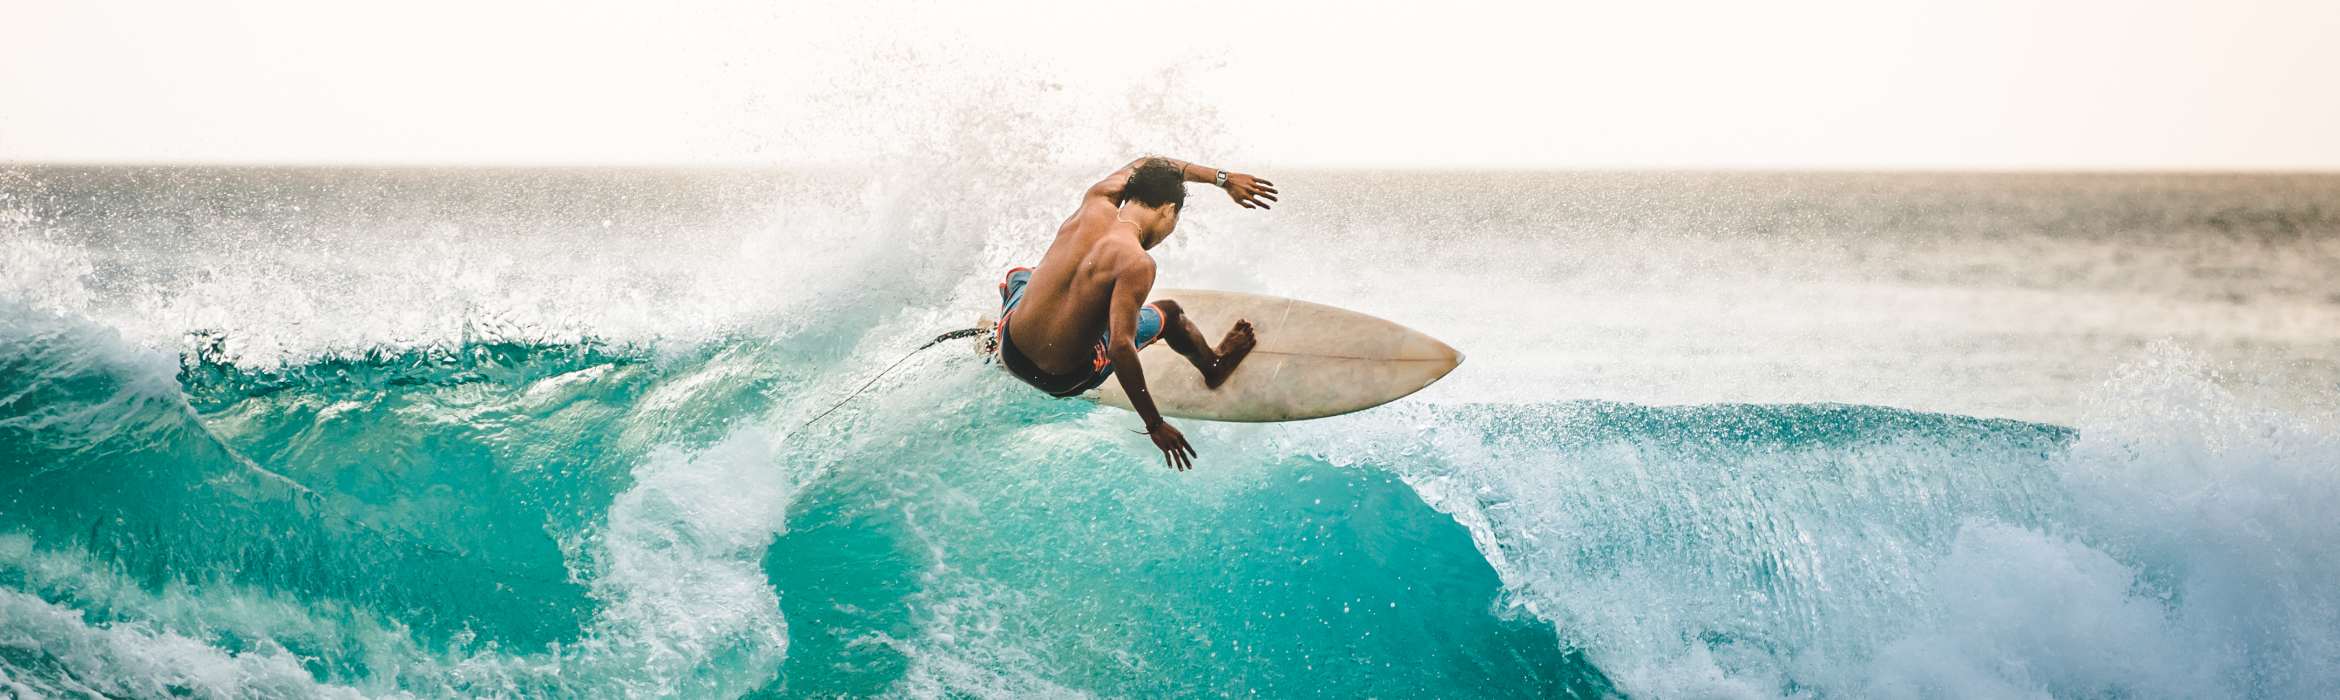 Surfer op de golven.